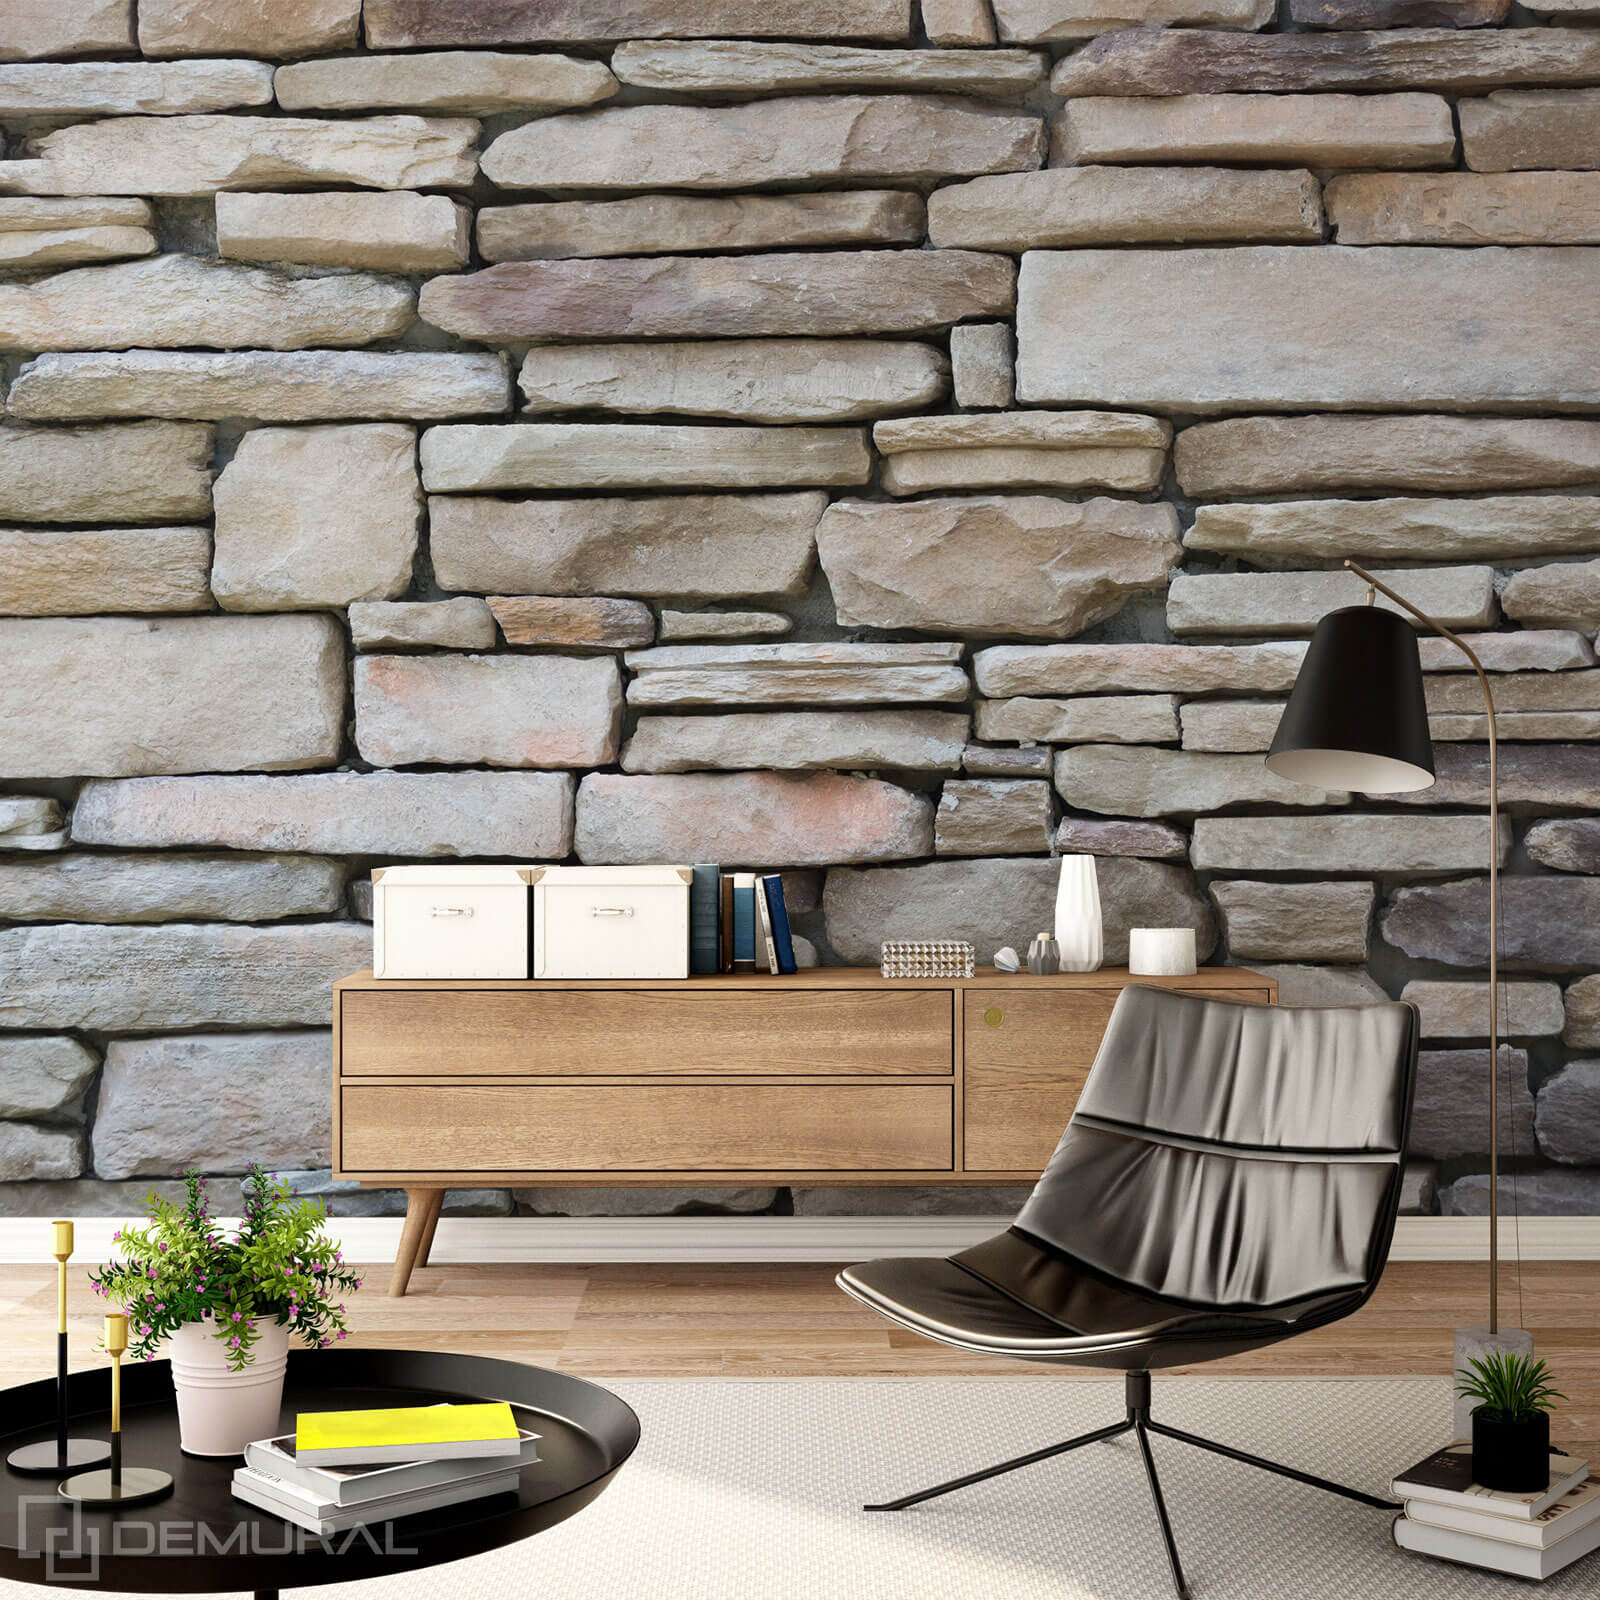 Photo wallpaper Stone wall - Photo wallpaper 3D - Demural